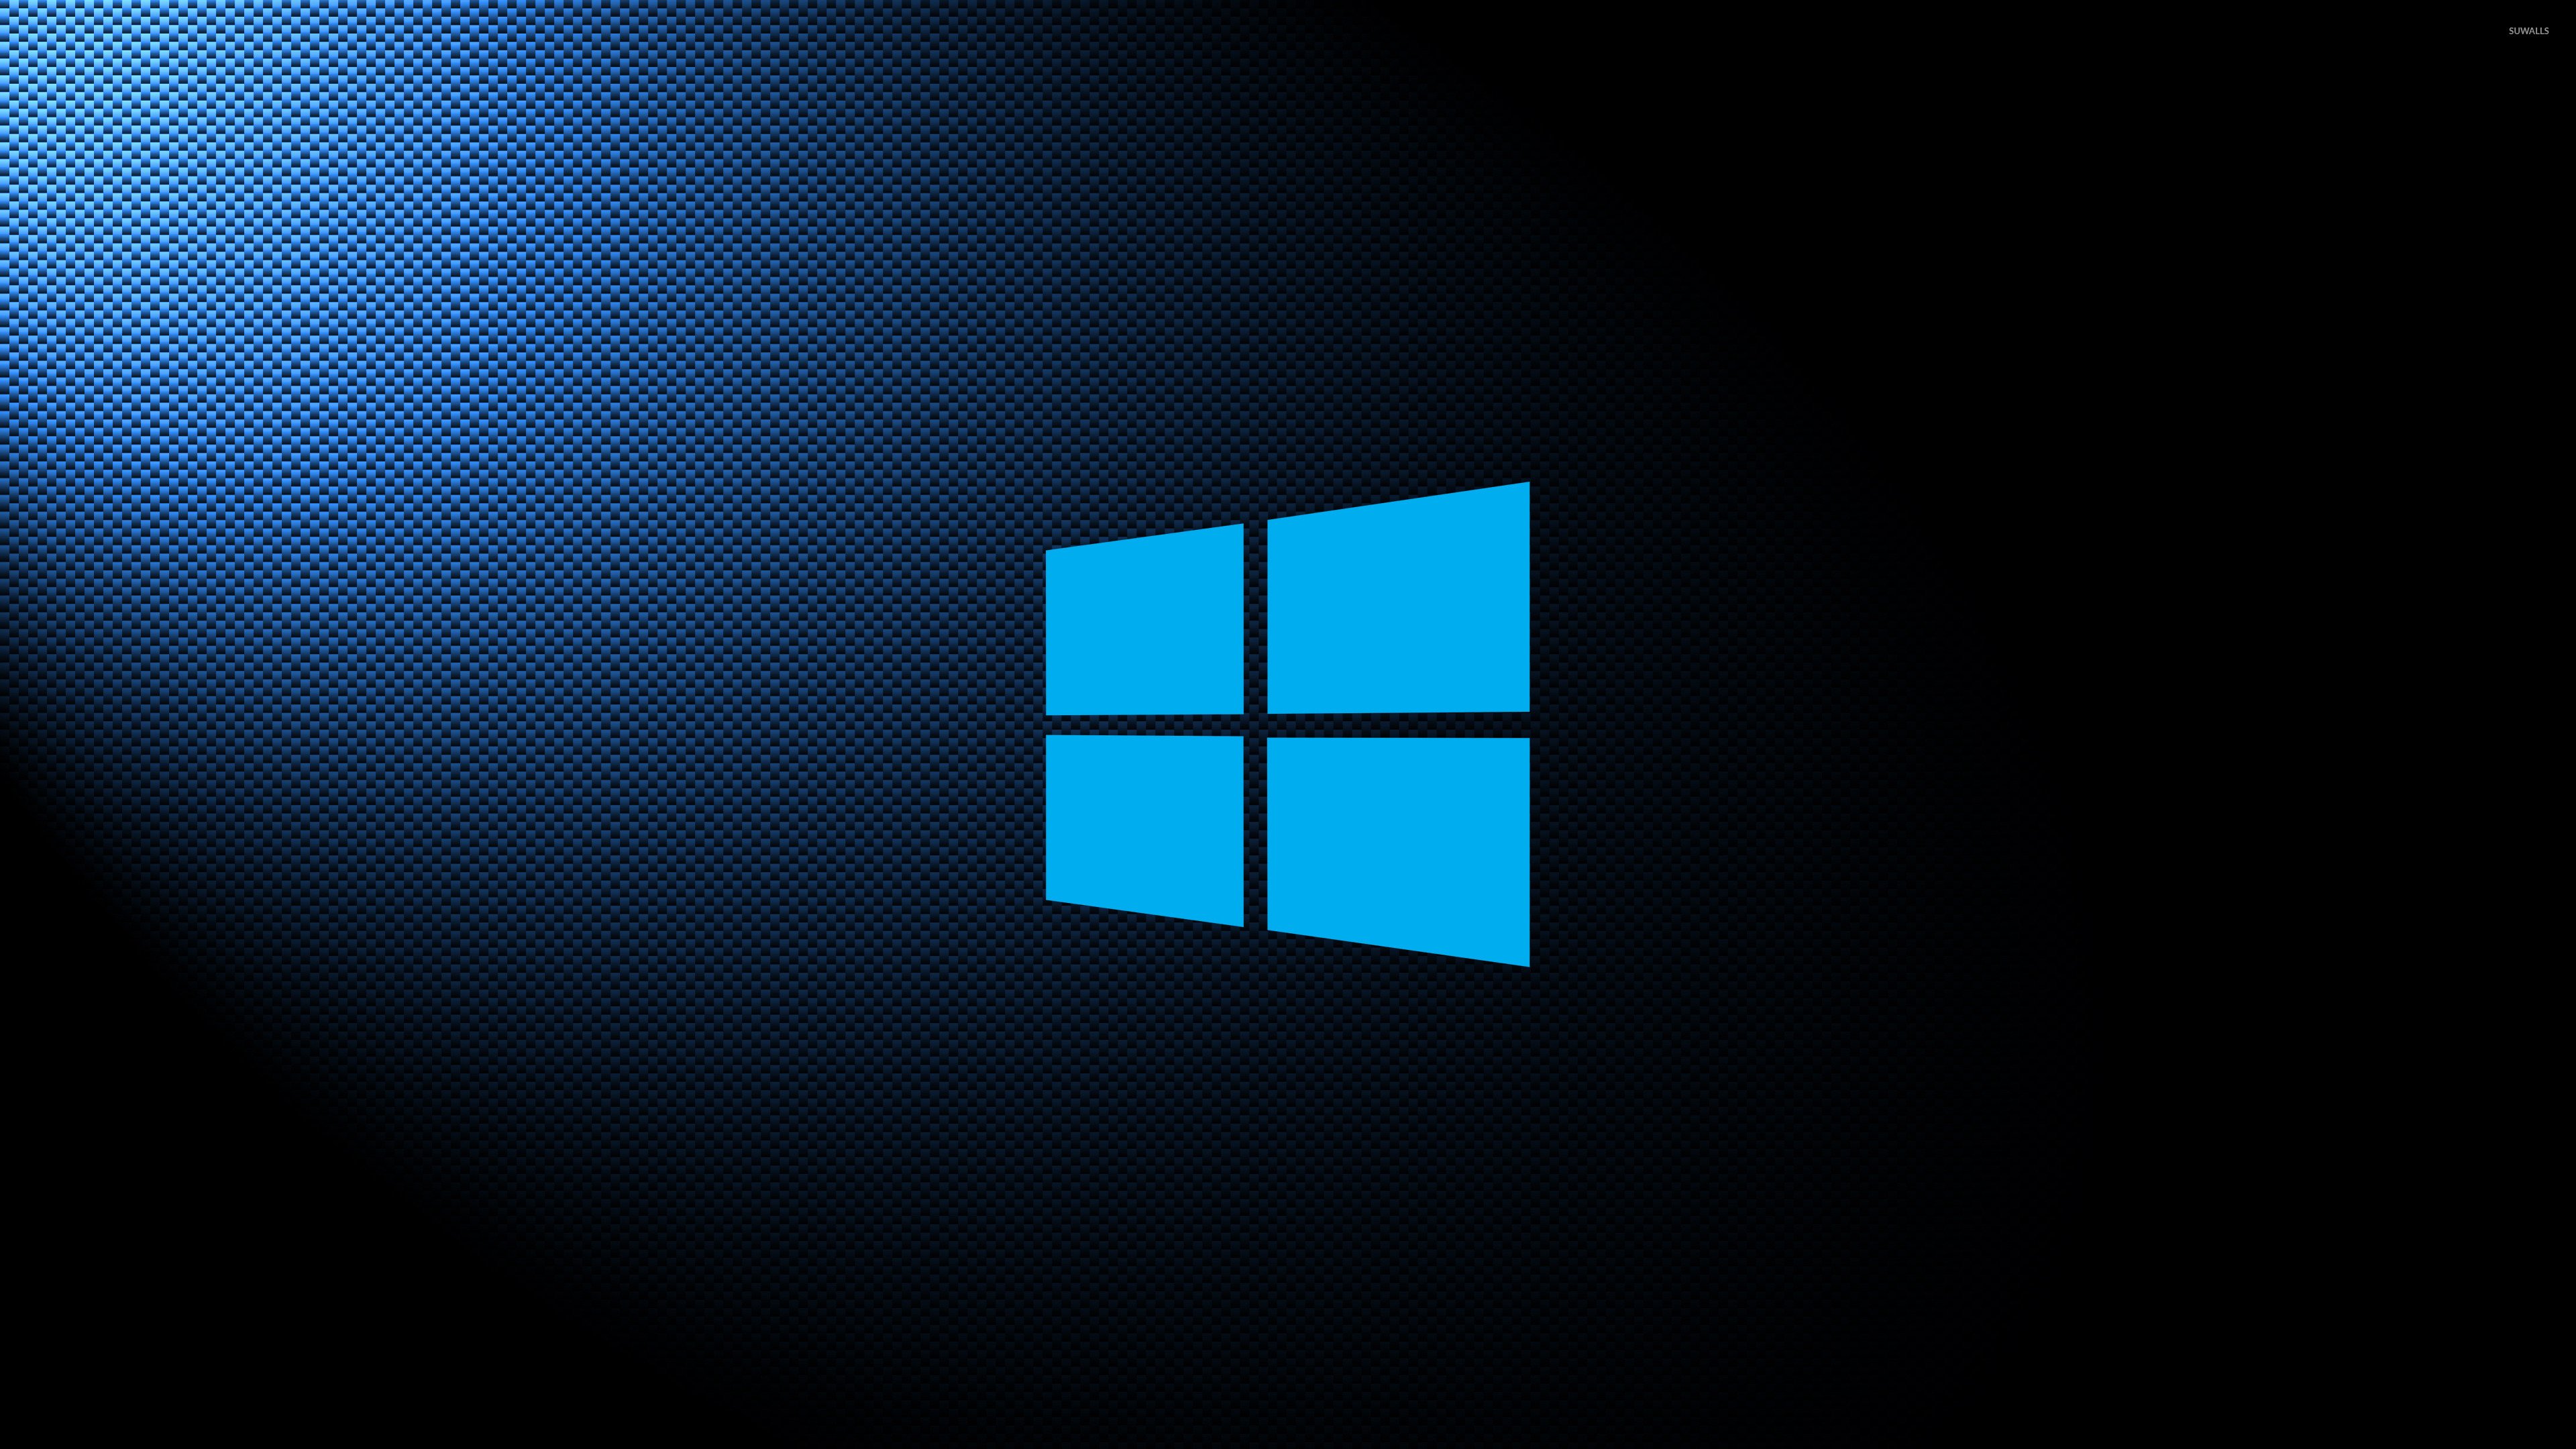 Windows 10 simple blue logo on carbon fiber wallpaper wallpaper